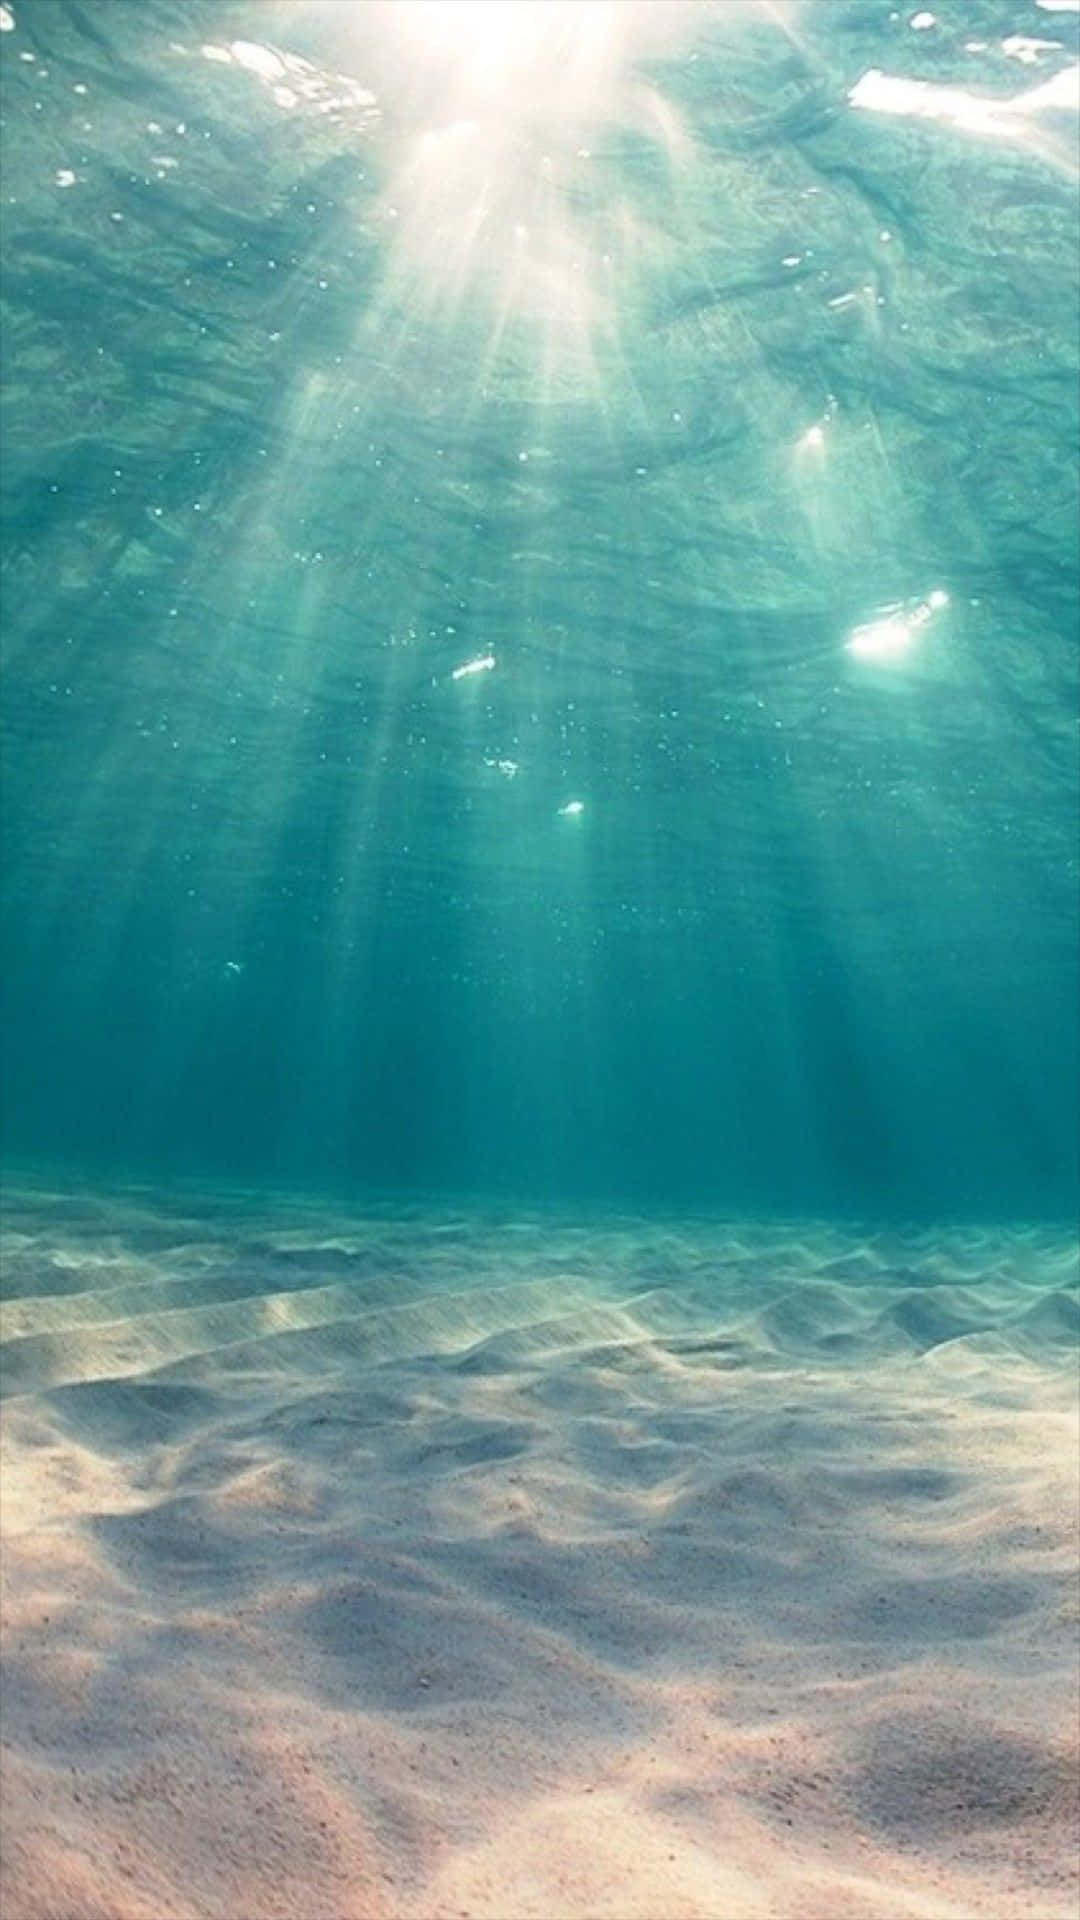 Underwater view of the ocean floor with sun rays shining through the water - Cyan, sunlight, ocean, sunshine, mermaid, underwater, sun